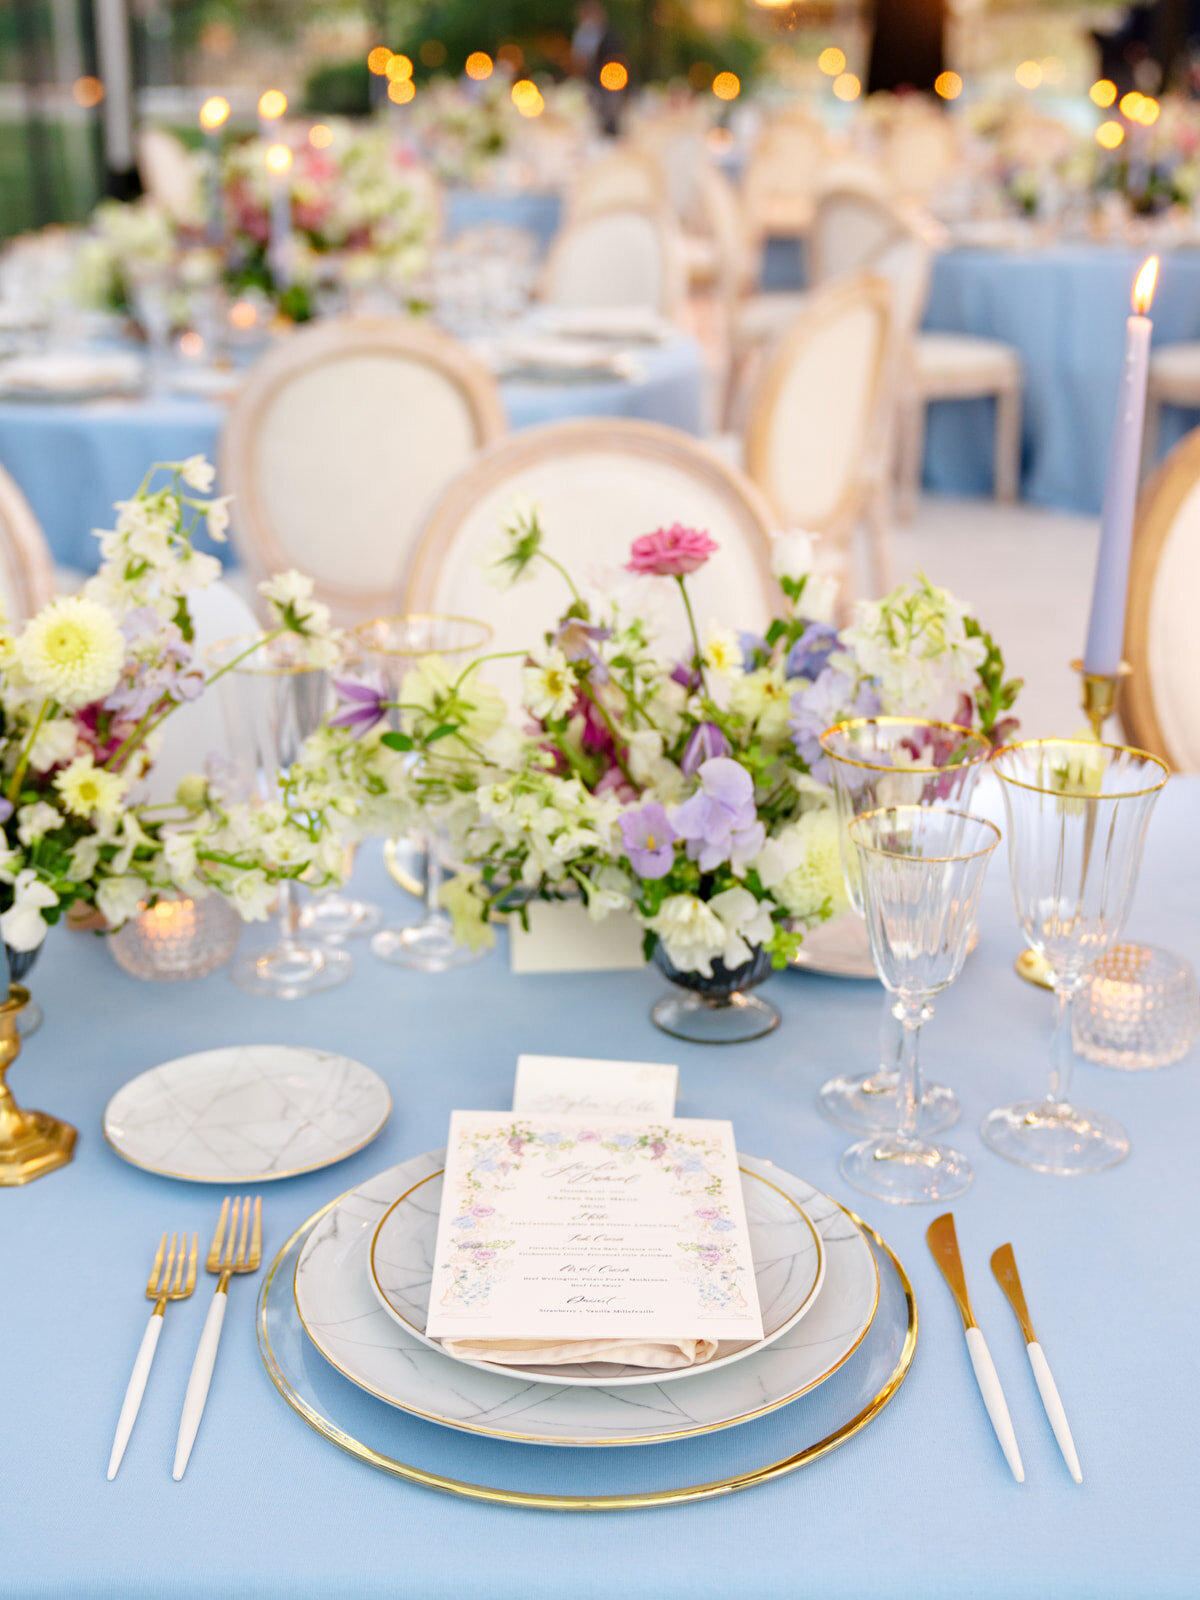 Elegant and floral tablescape inspiration